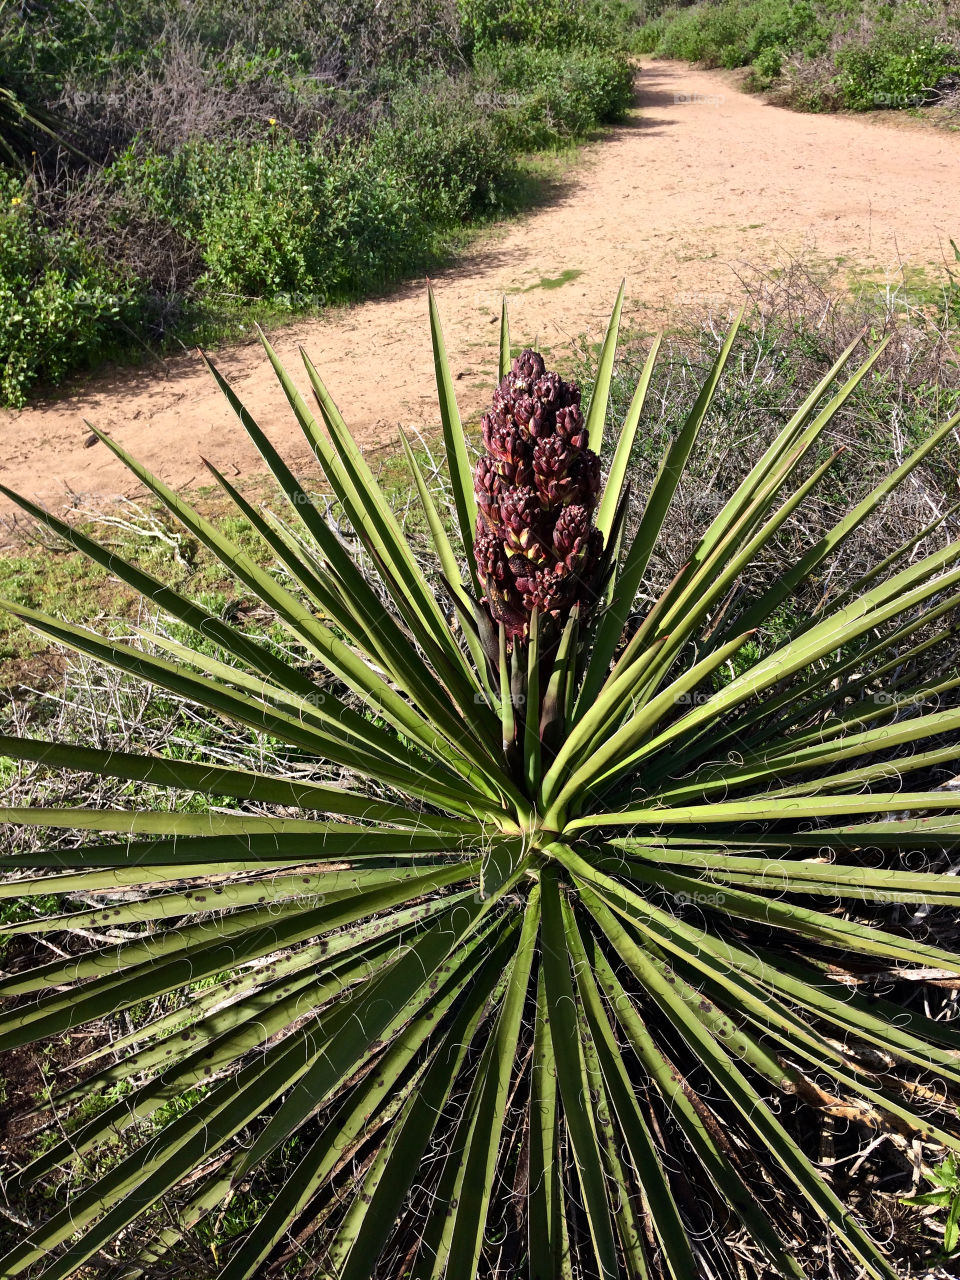 Yucca bloom